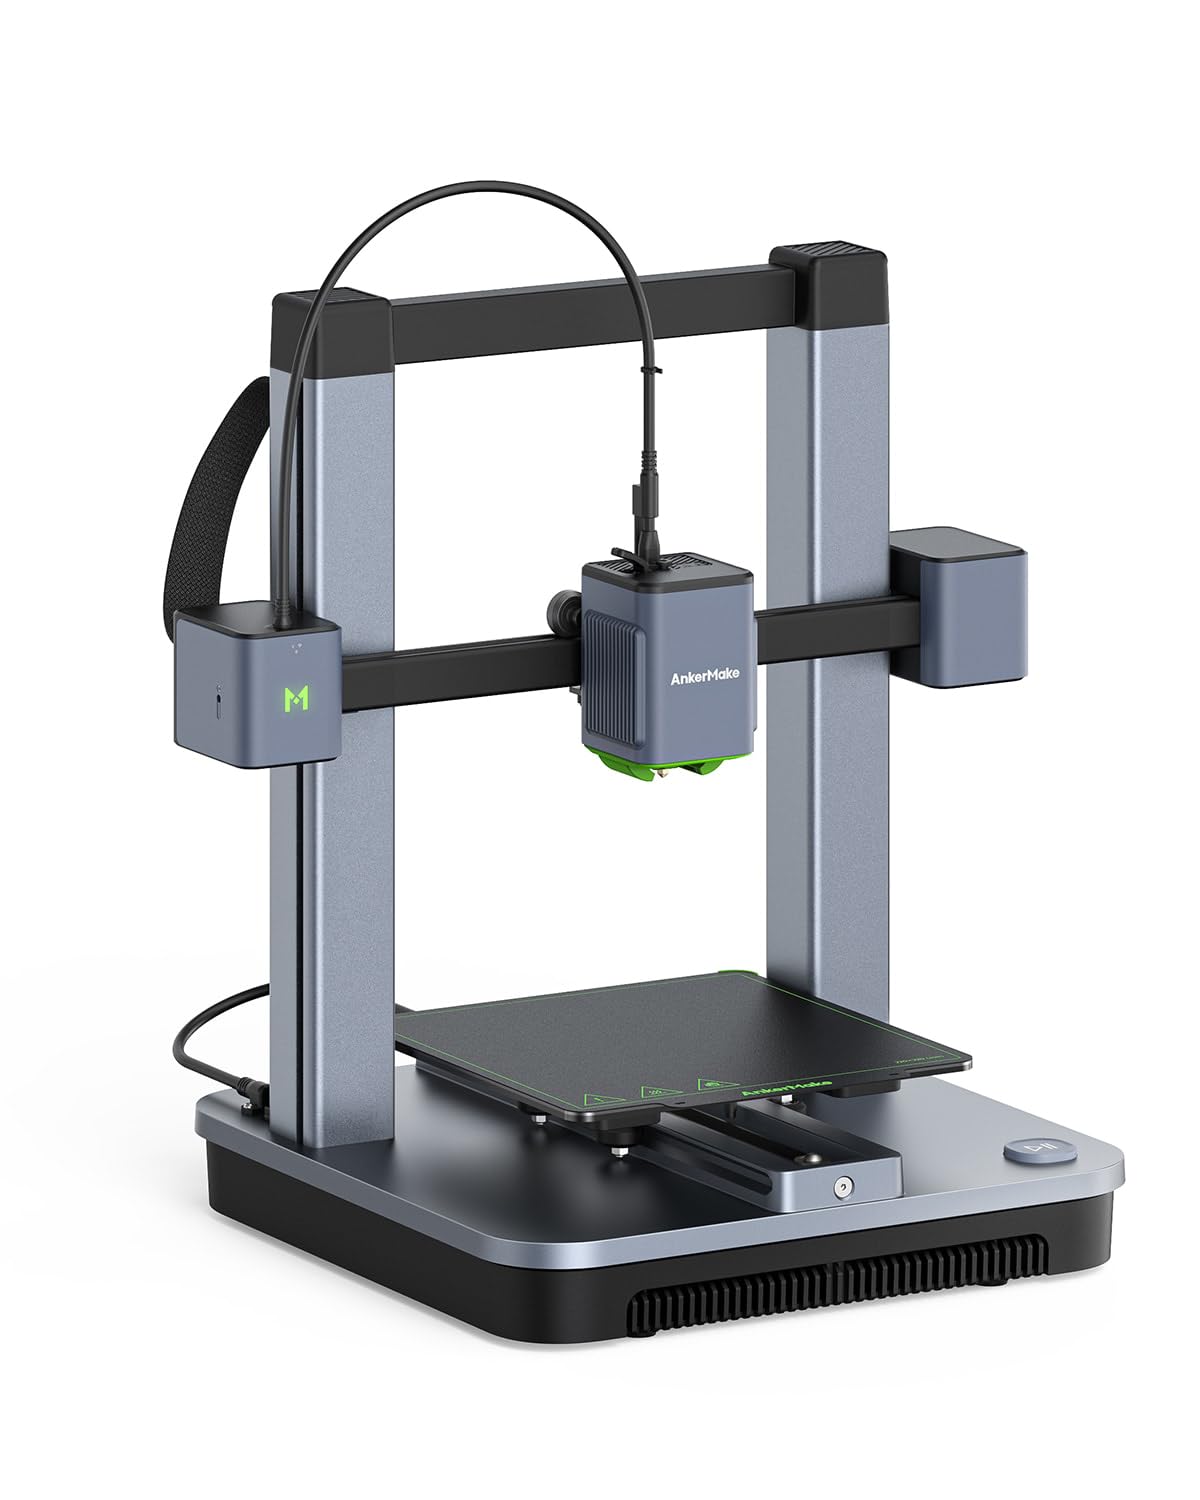 Prime Members: AnkerMake M5C 3D Printer, 500 mm/s High-Speed Printing $299.99 + Free Shipping